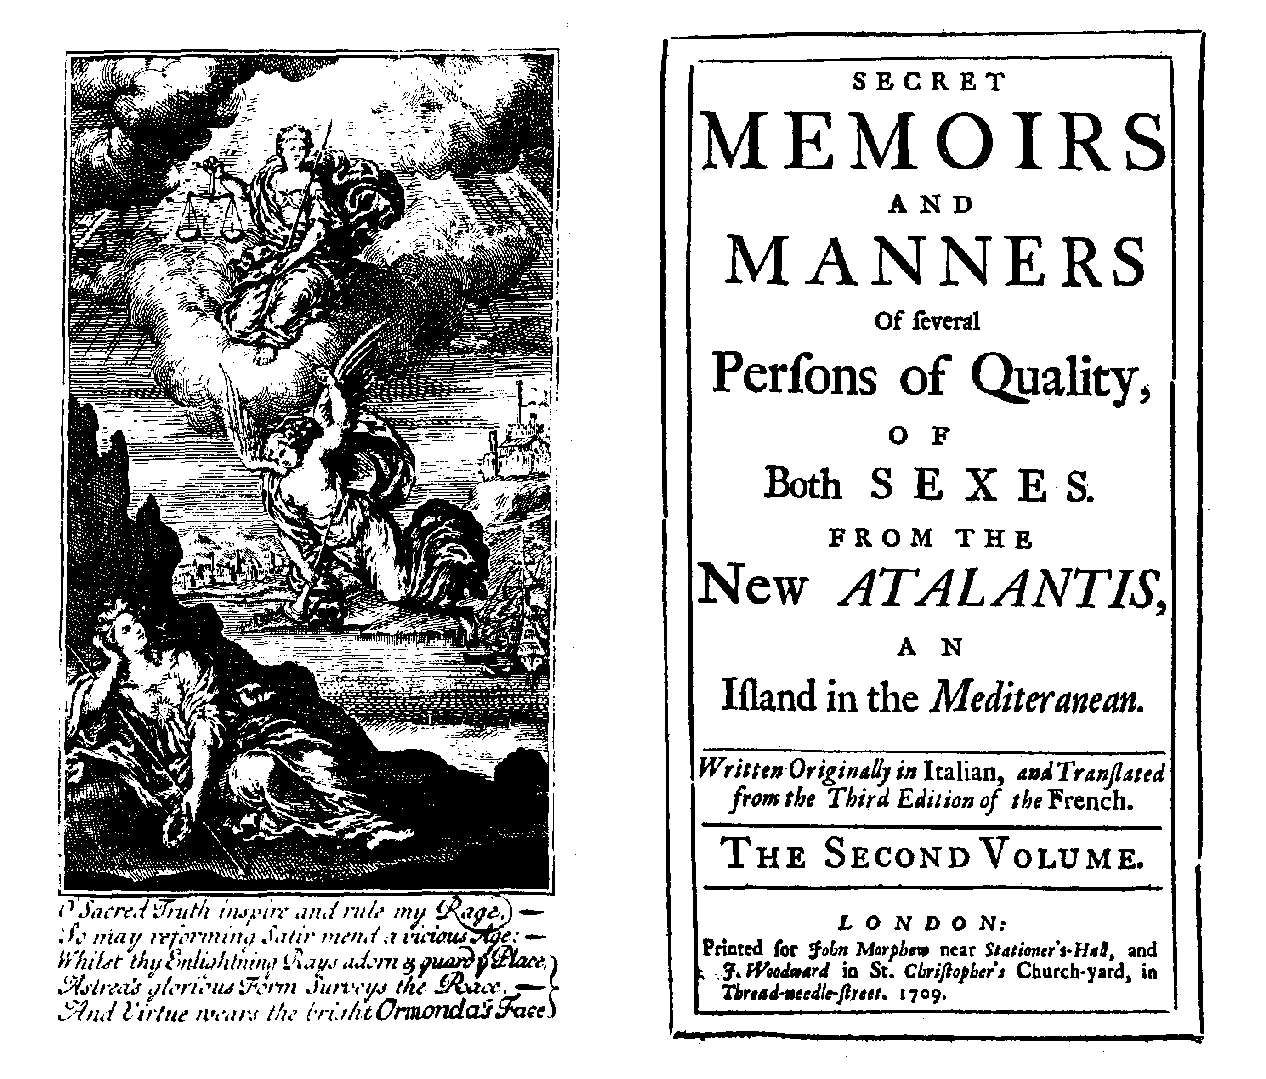 Delarivier Manley, Atalantis, vol. 2 (London: J. Morphew/ J. Woodward, 1709).